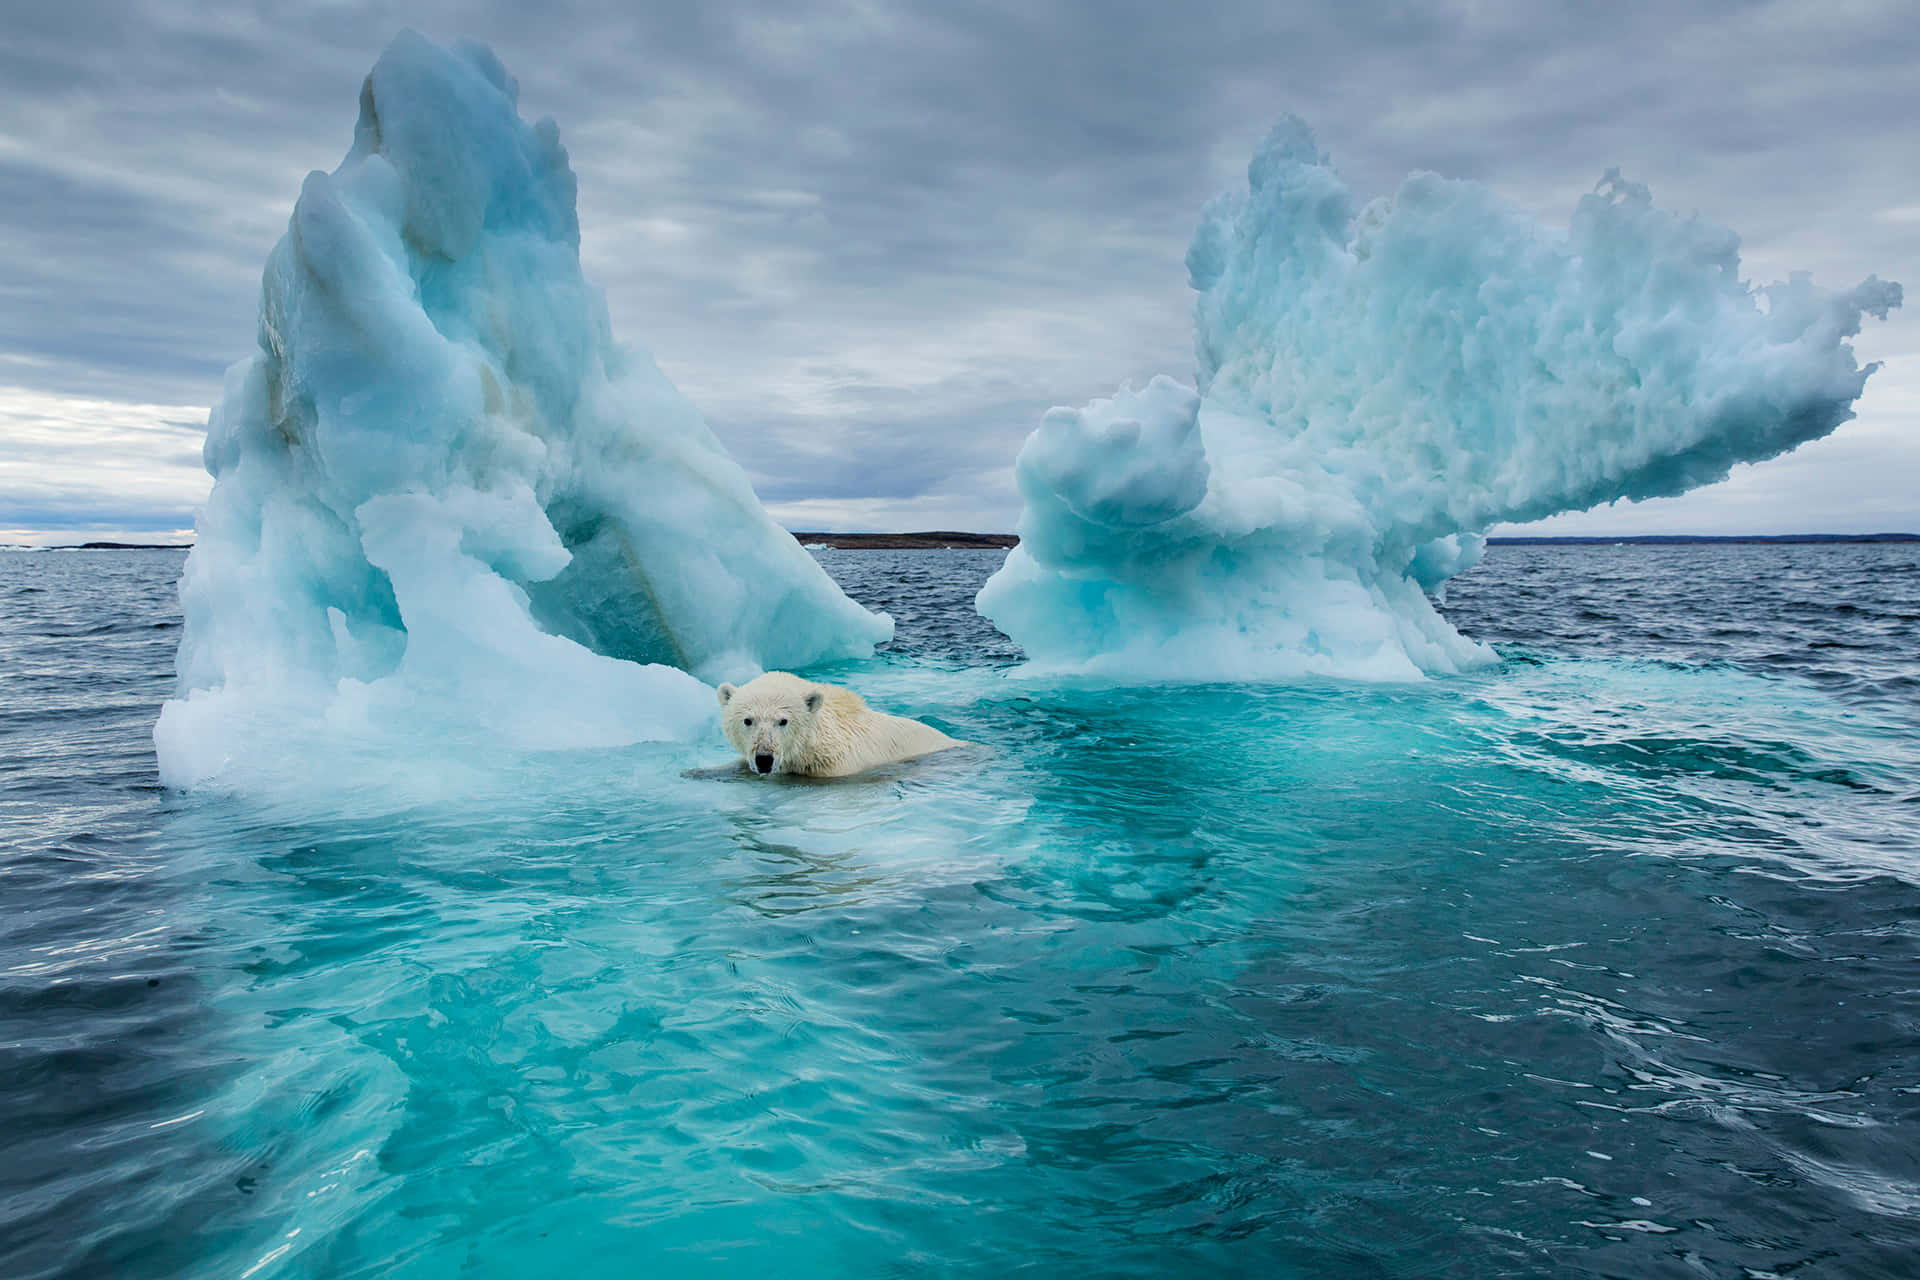 Polarrävari Arktis (assuming You Meant Polar Foxes Instead Of Polar Bears - If You Meant Polar Bears It Would Be 